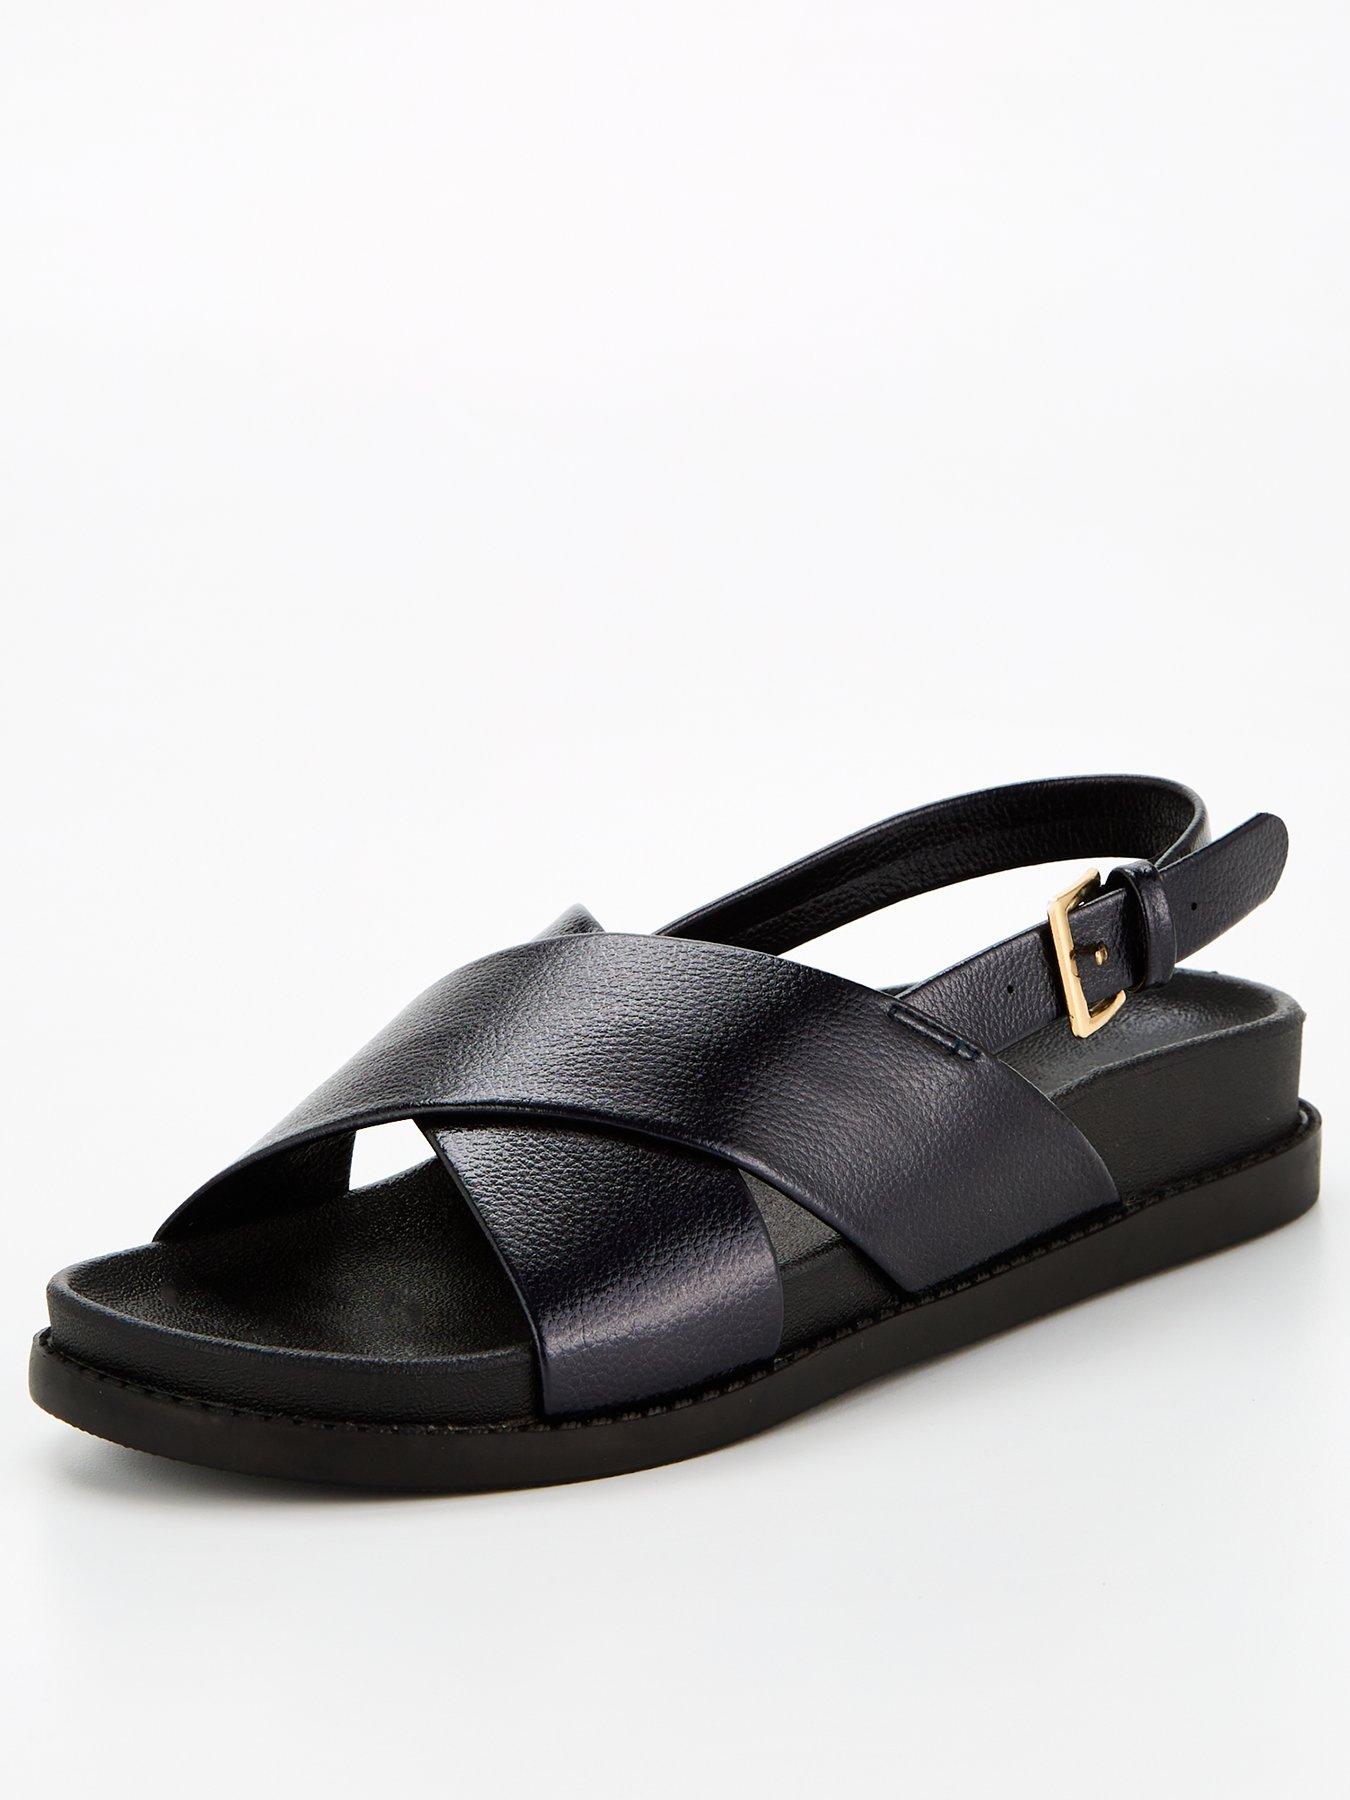 V by Very Extra Wide Fit Cross Strap Flat Sandal - Black, Black, Size 6Eee, Women